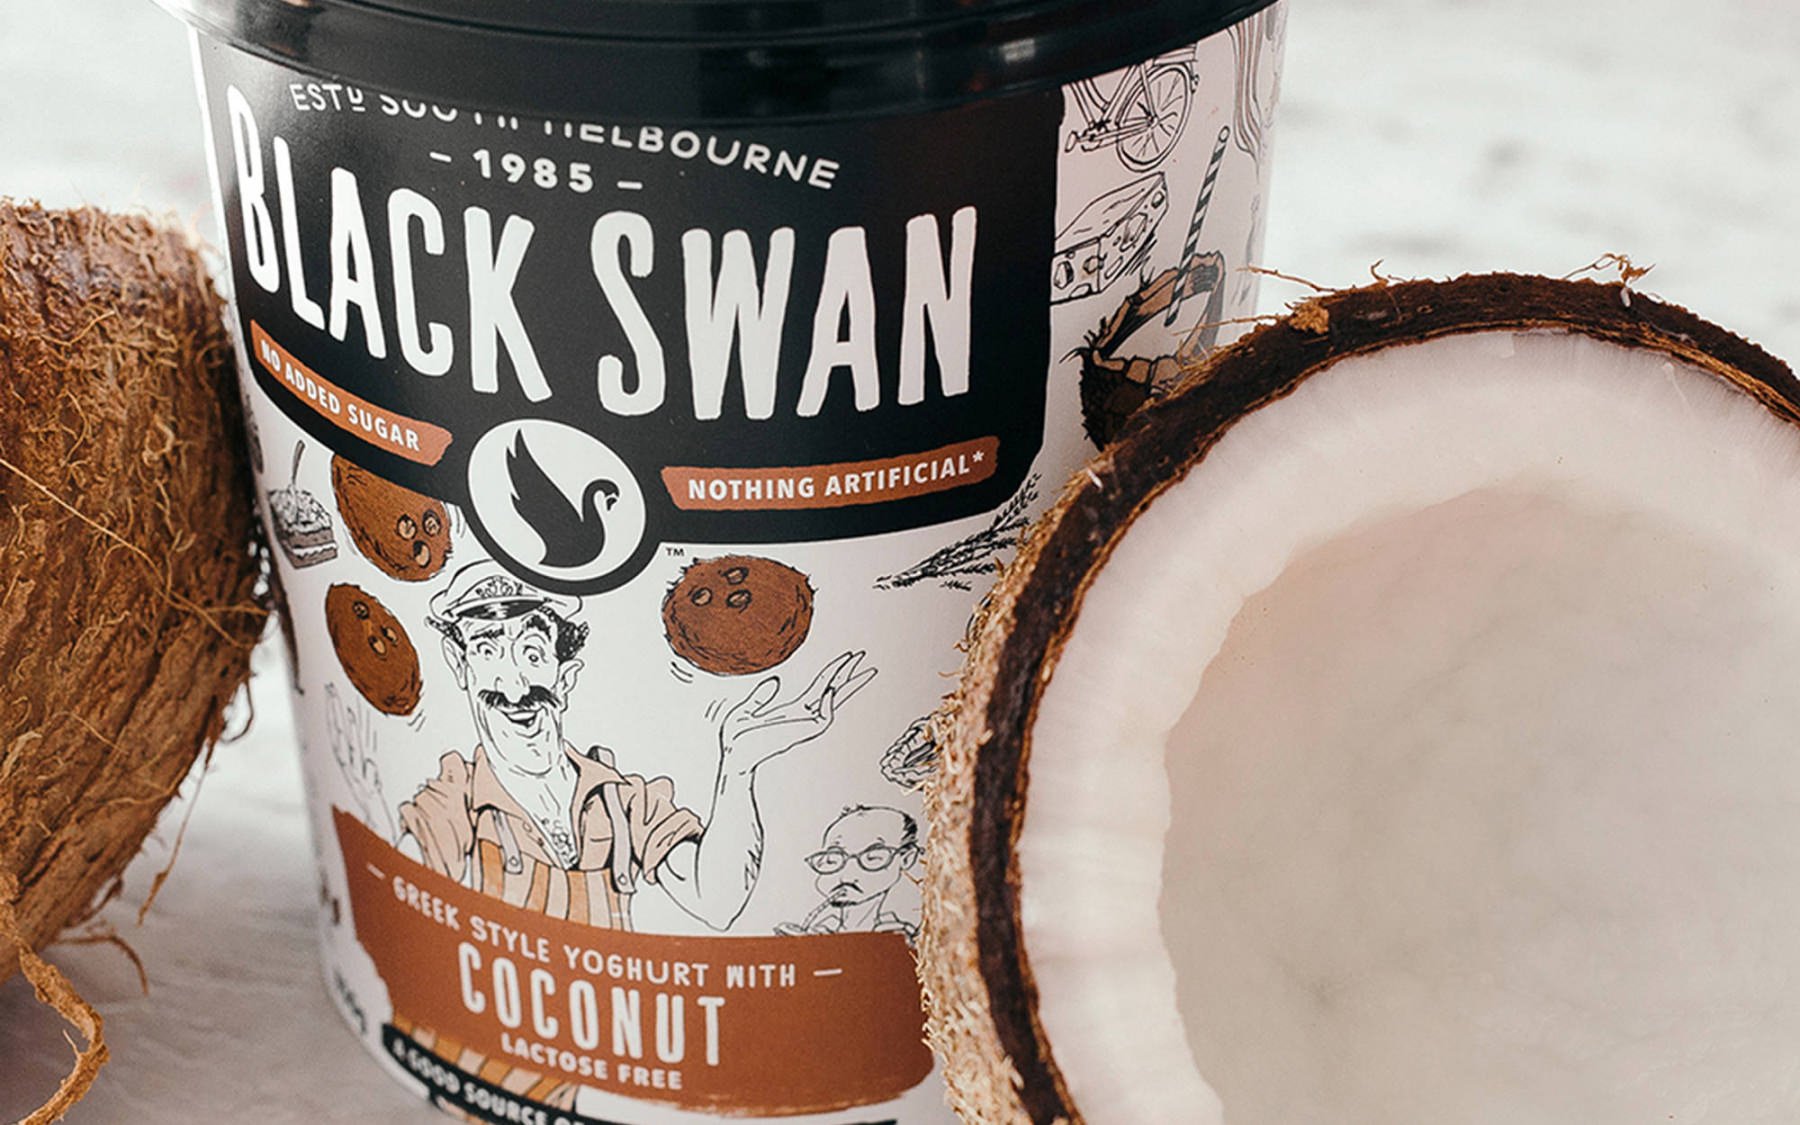 Close up of Black Swan's Low Fat Greek Style Yoghurt coconut packaging.